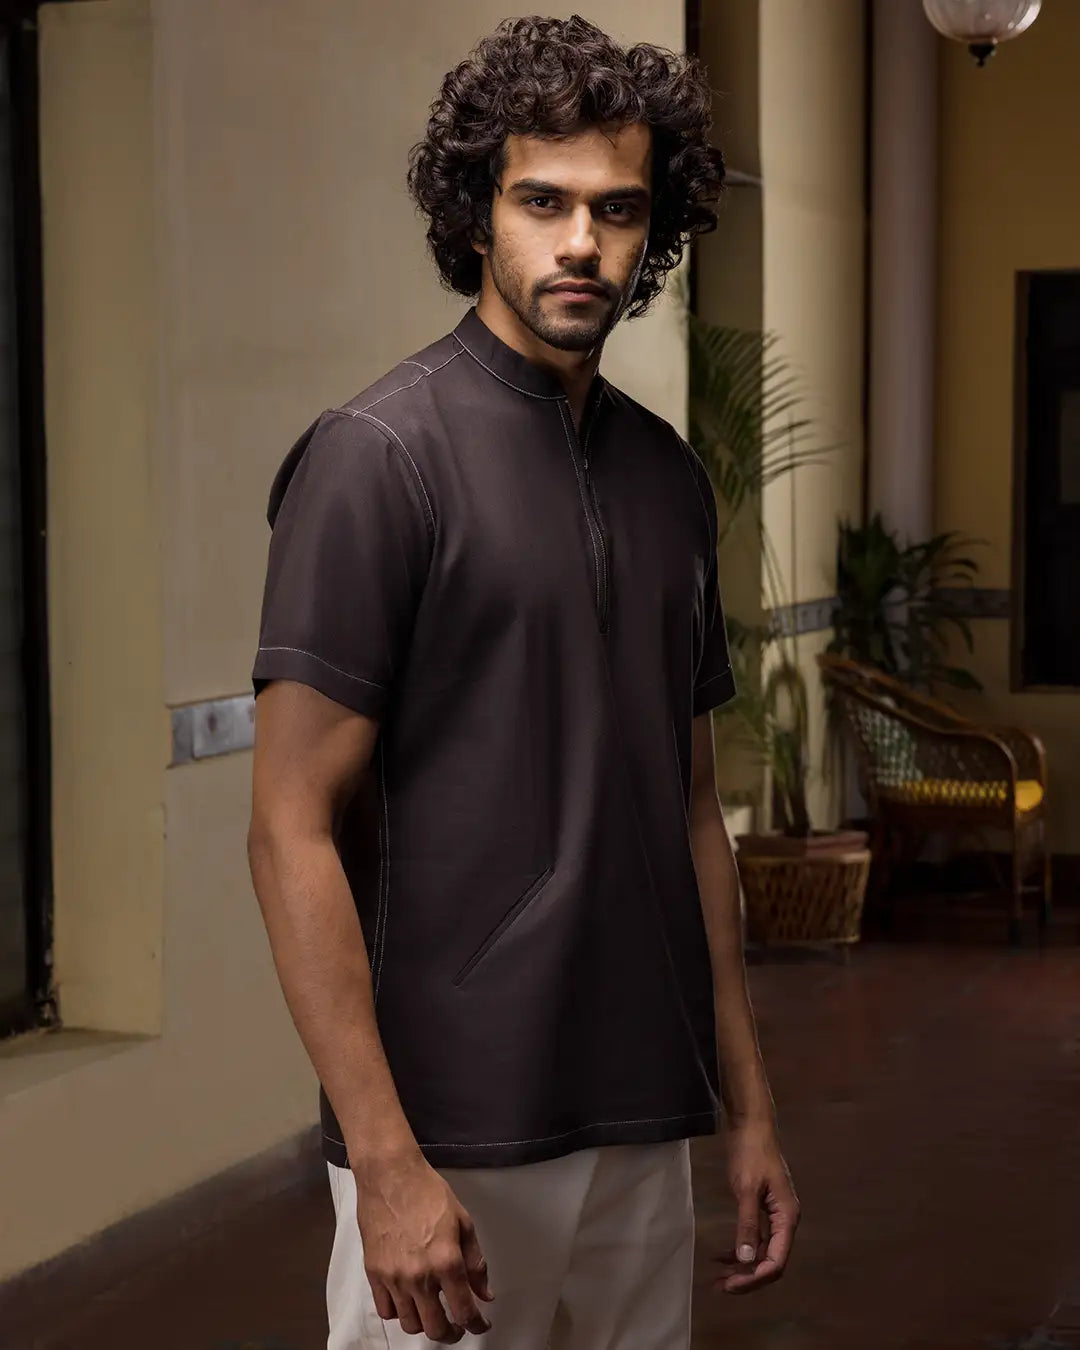 Modern stylish black zipper front shirt for men, Stylish and functional zipper front shirt for men, combining modern design with comfort